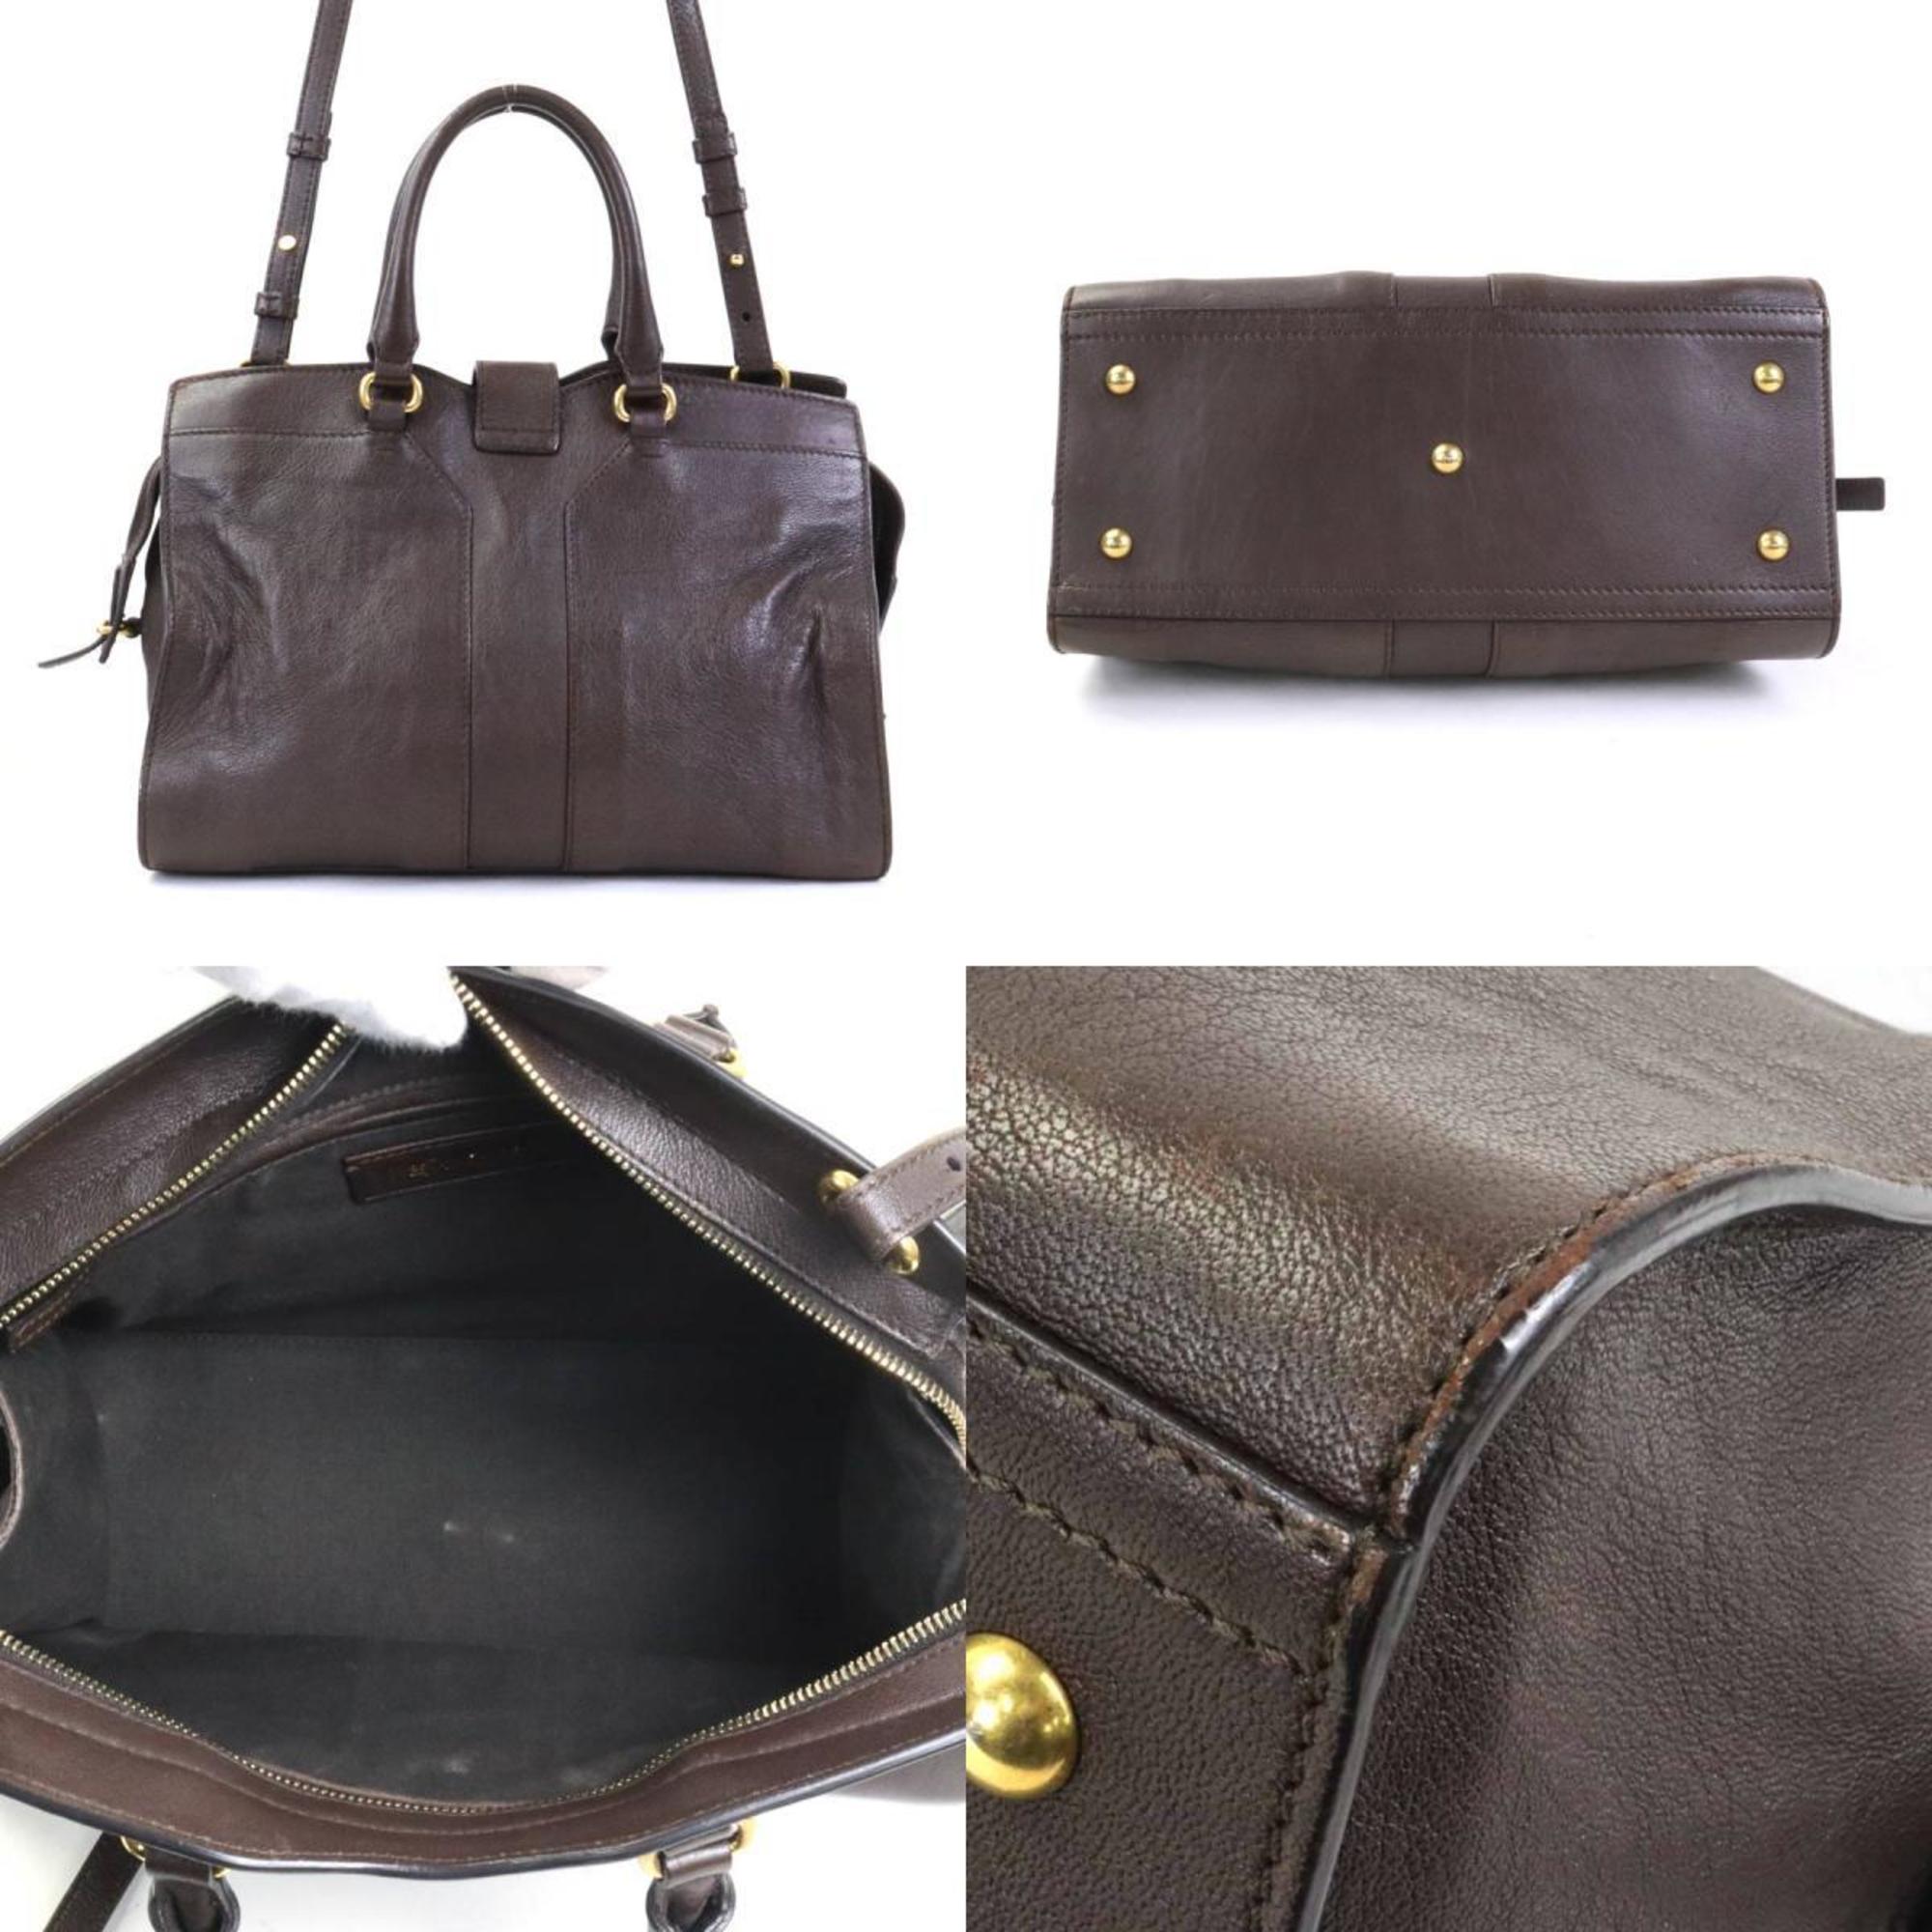 Yves Saint Laurent YVES SAINT LAURENT Handbag Shoulder Bag Y Line Cabas Leather Dark Brown Gold Women's e56055f